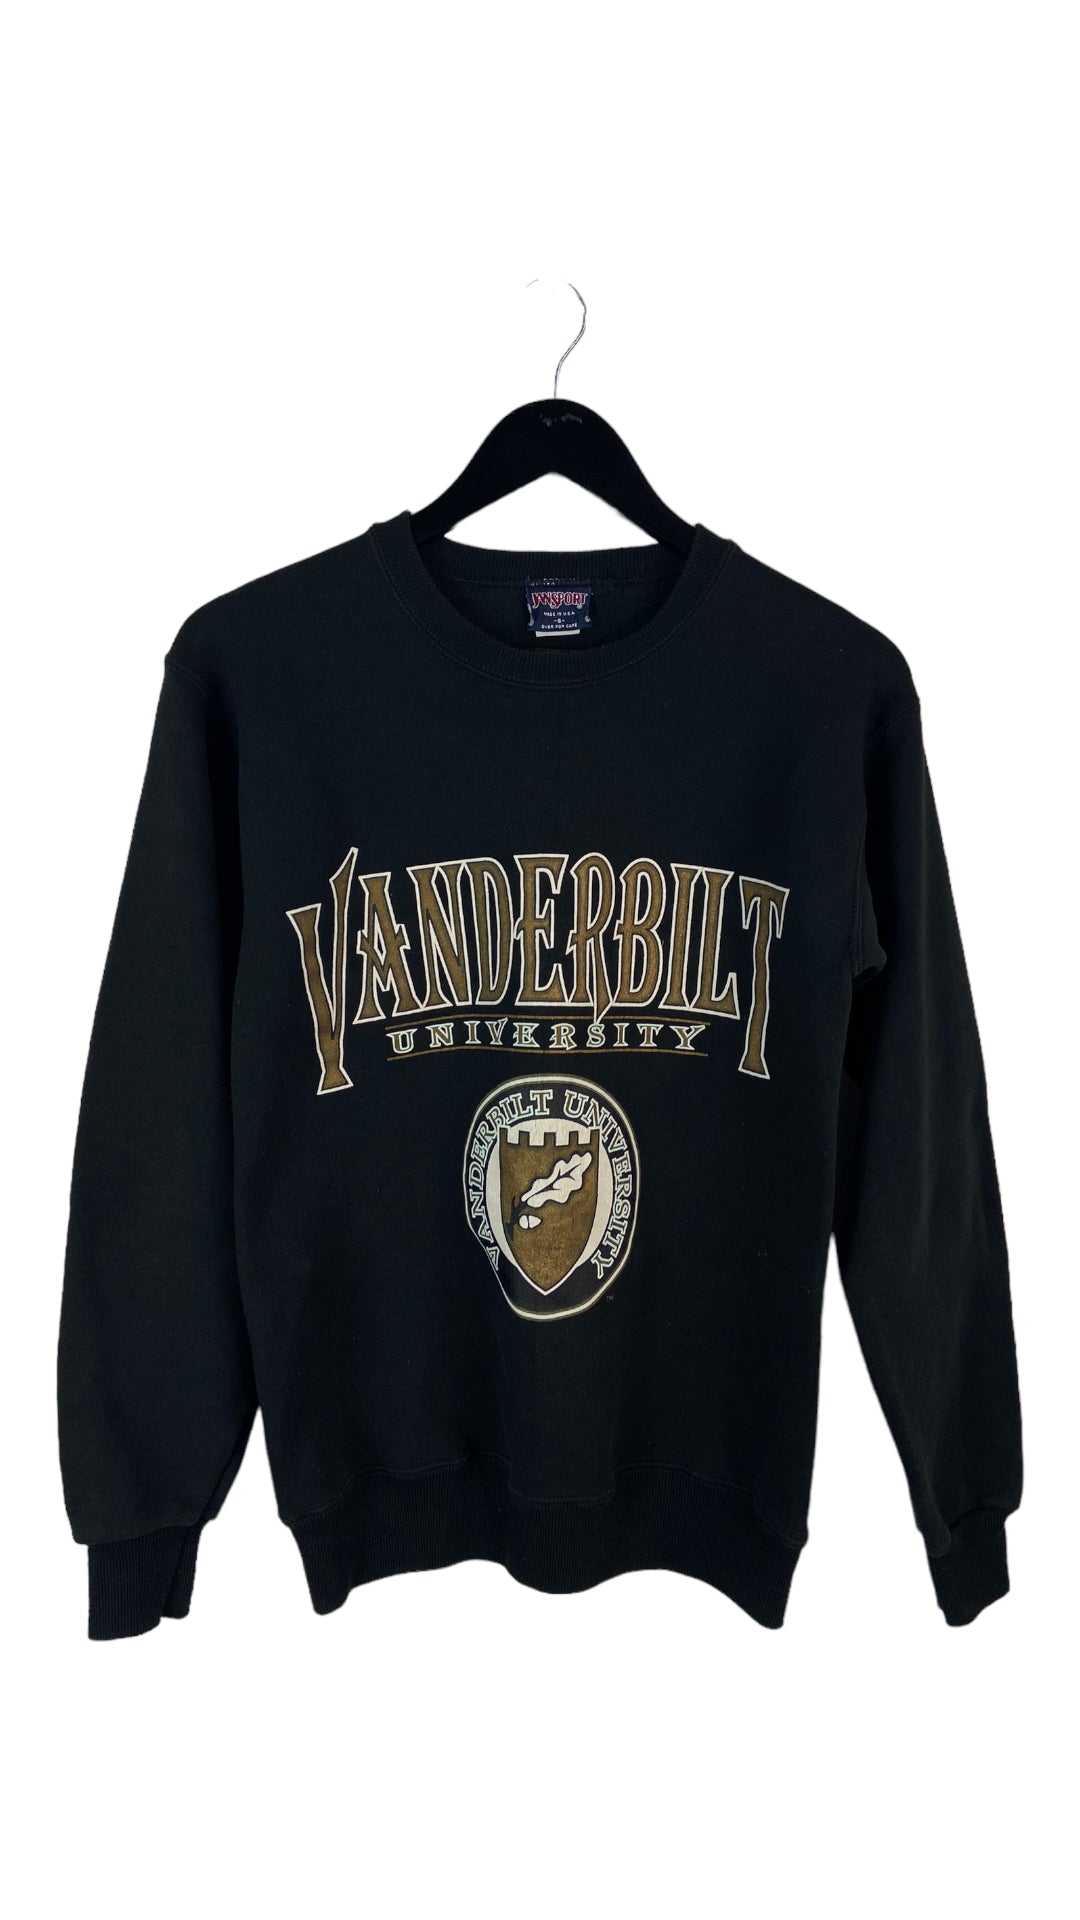 VTG Vanderbilt University School Crest Sz S